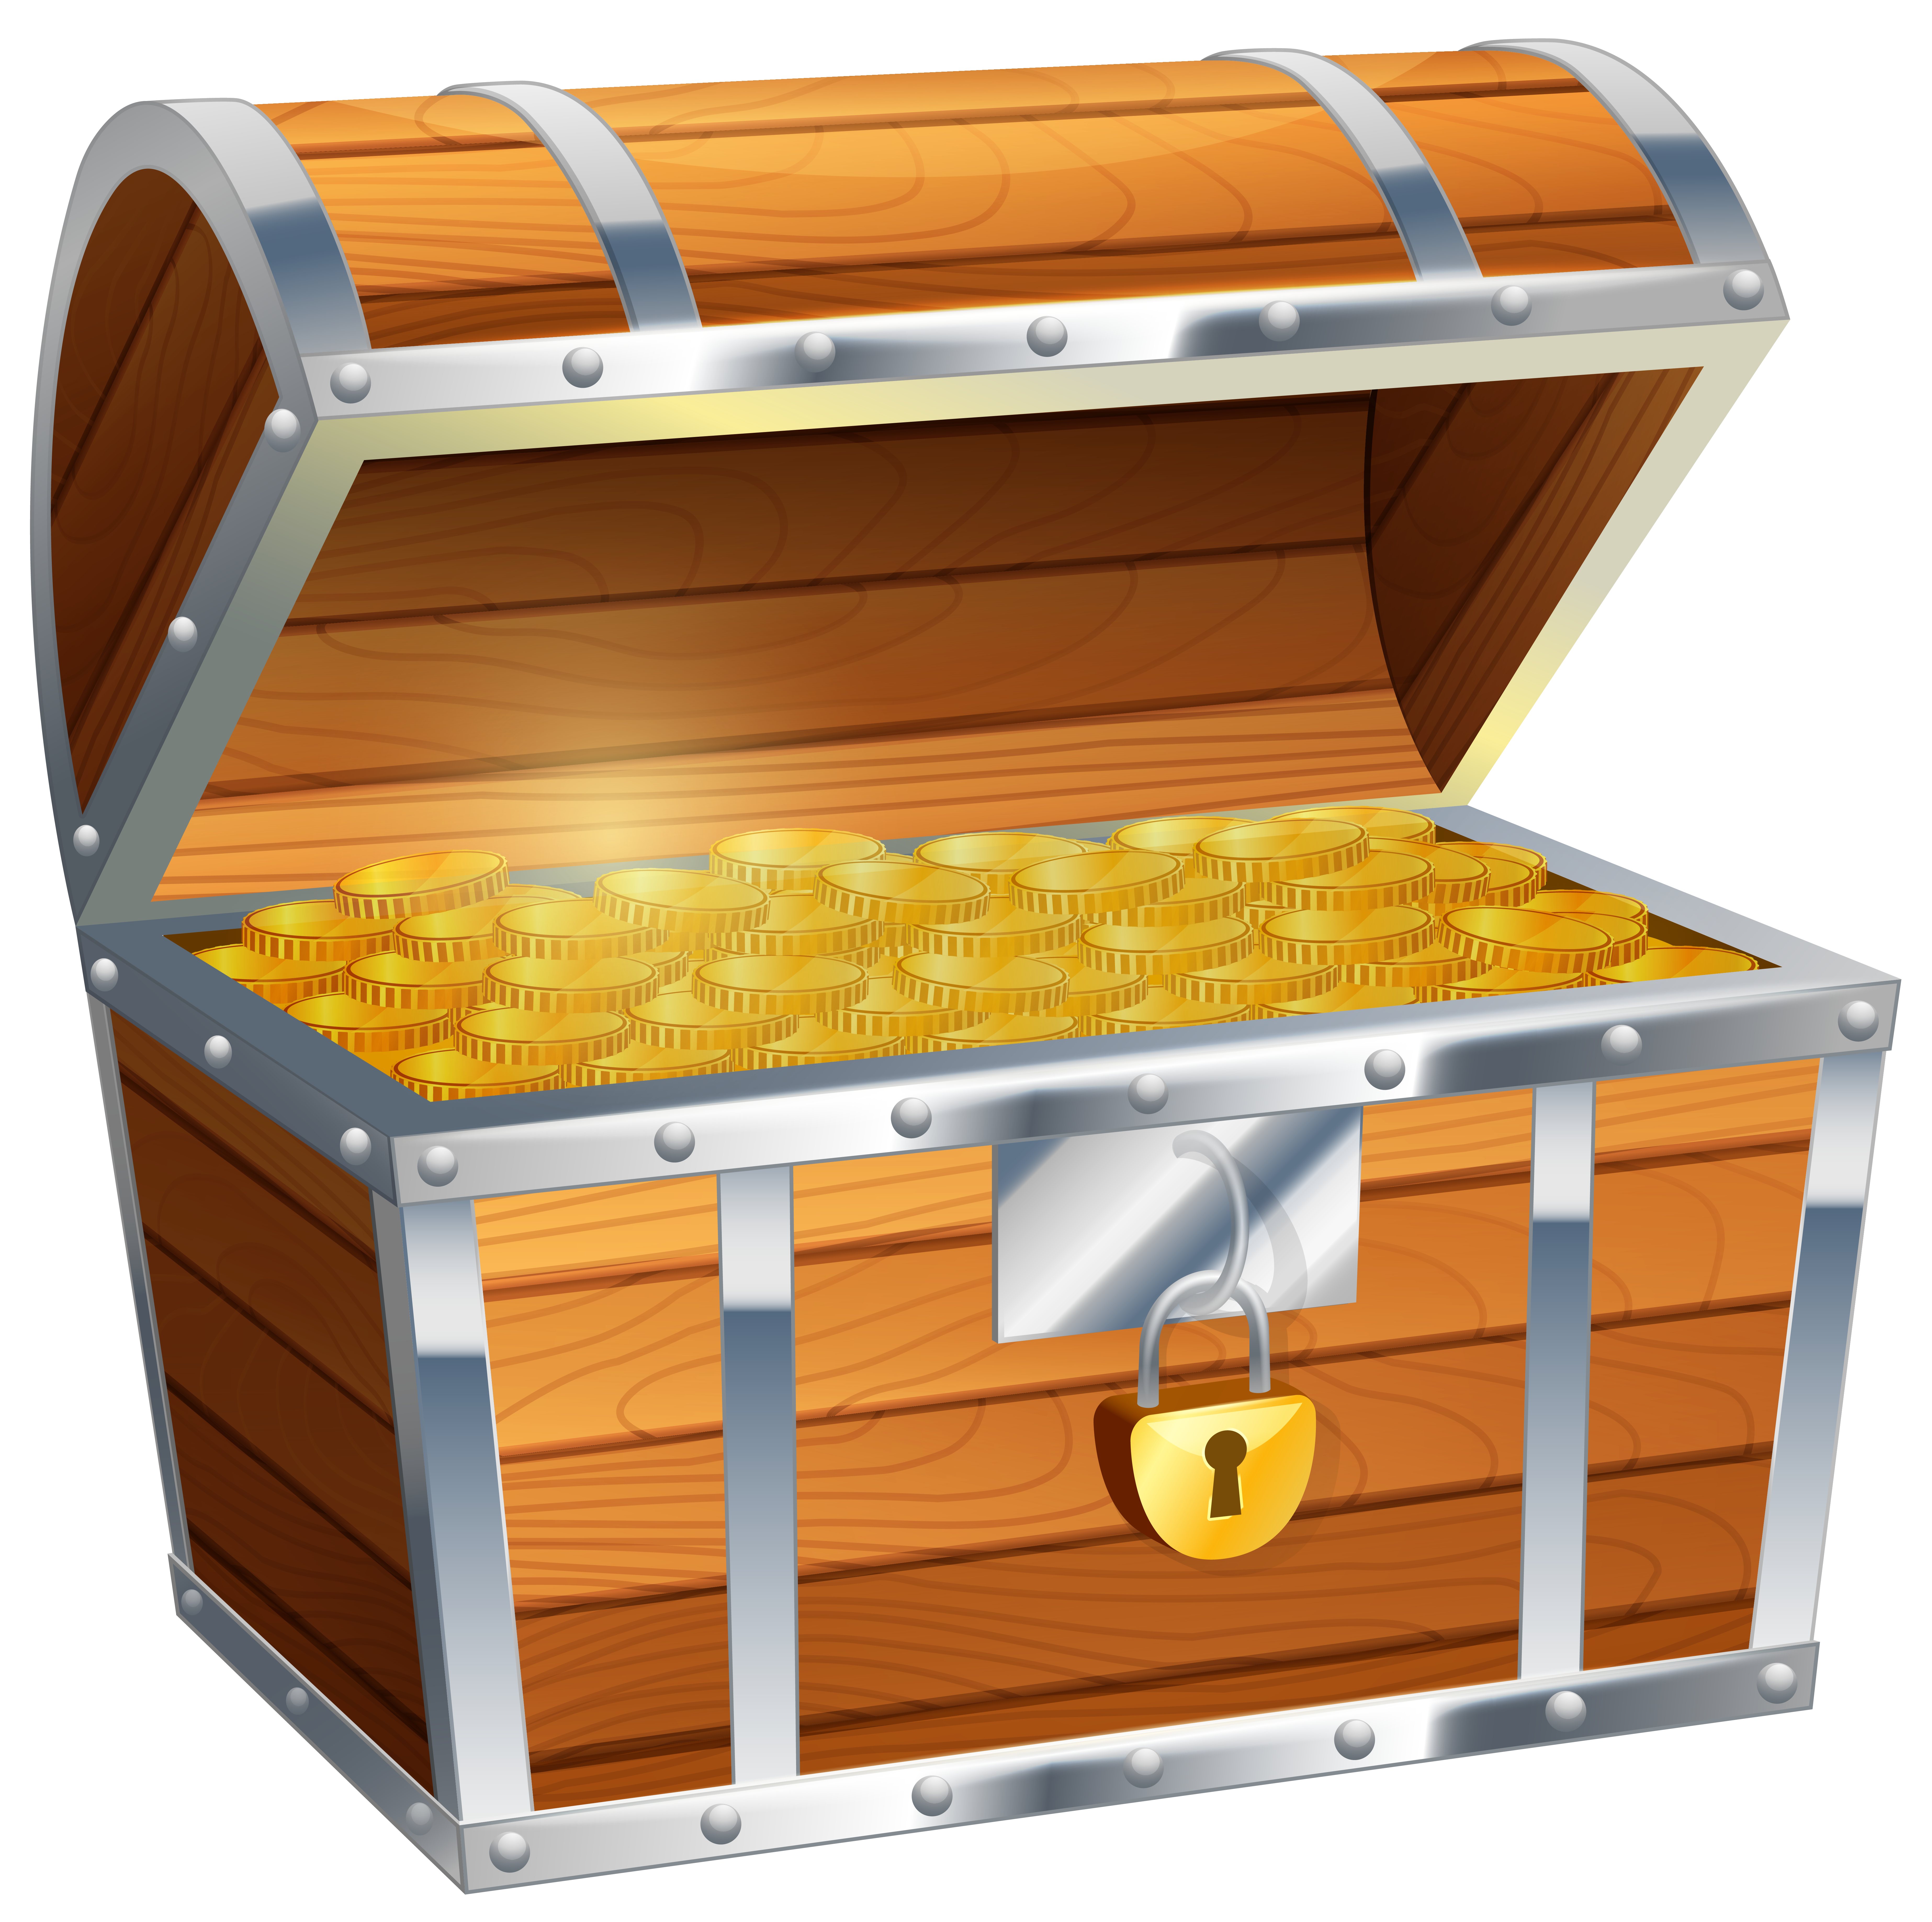 Keys clipart treasure chest. 